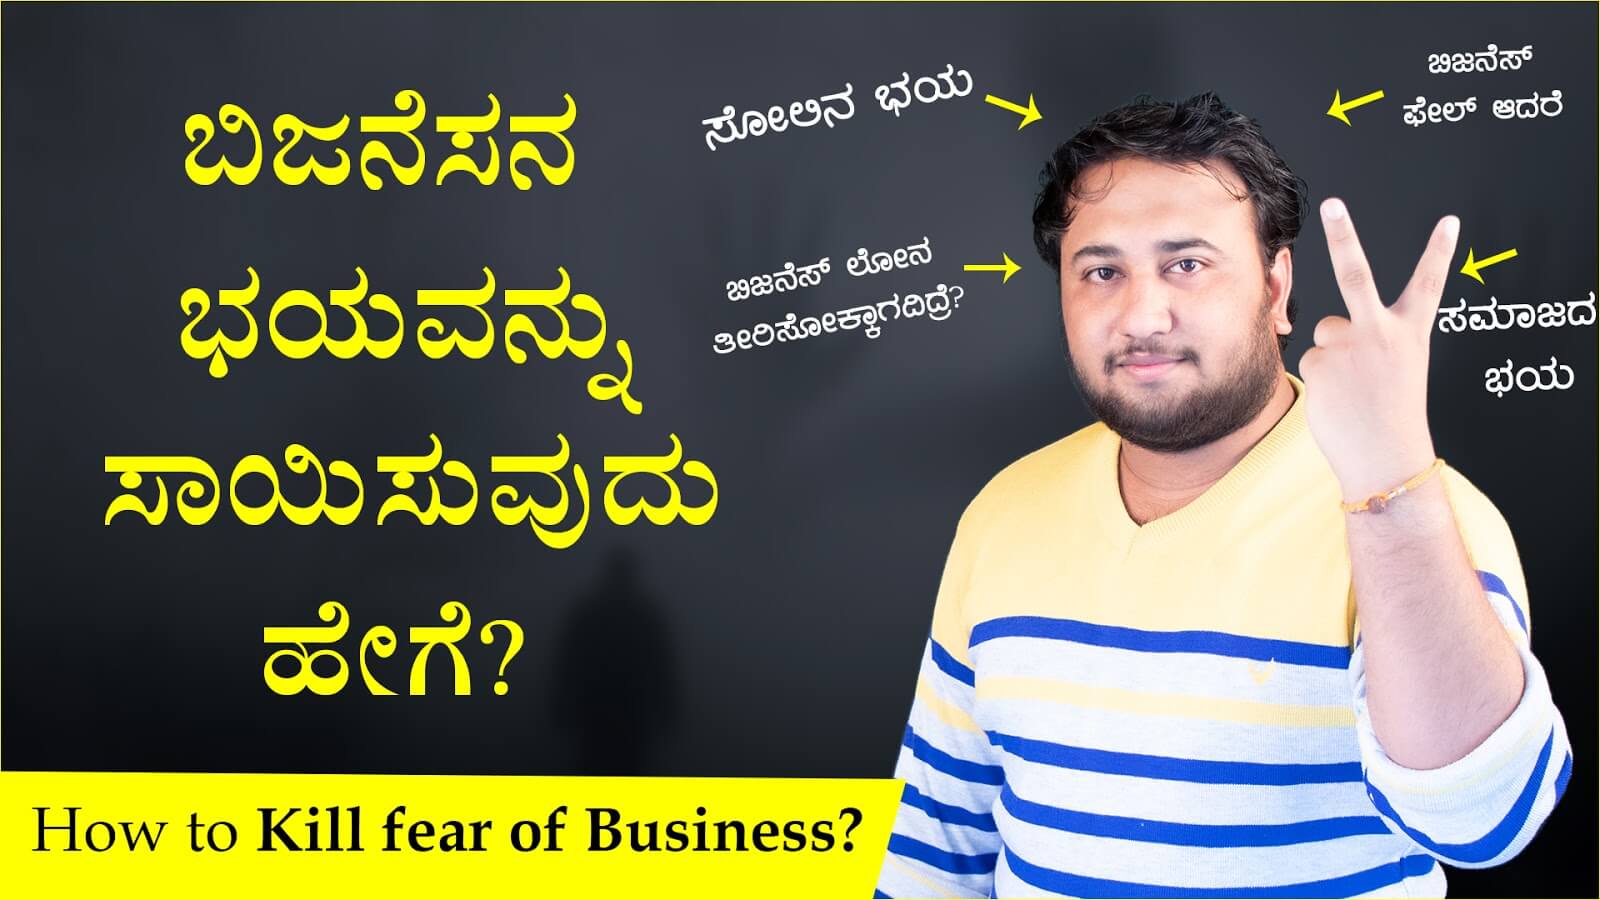 You are currently viewing ಬಿಜನೆಸನ ಭಯವನ್ನು ಸಾಯಿಸುವುದು ಹೇಗೆ? – How to Kill fear of Business? in Kannada